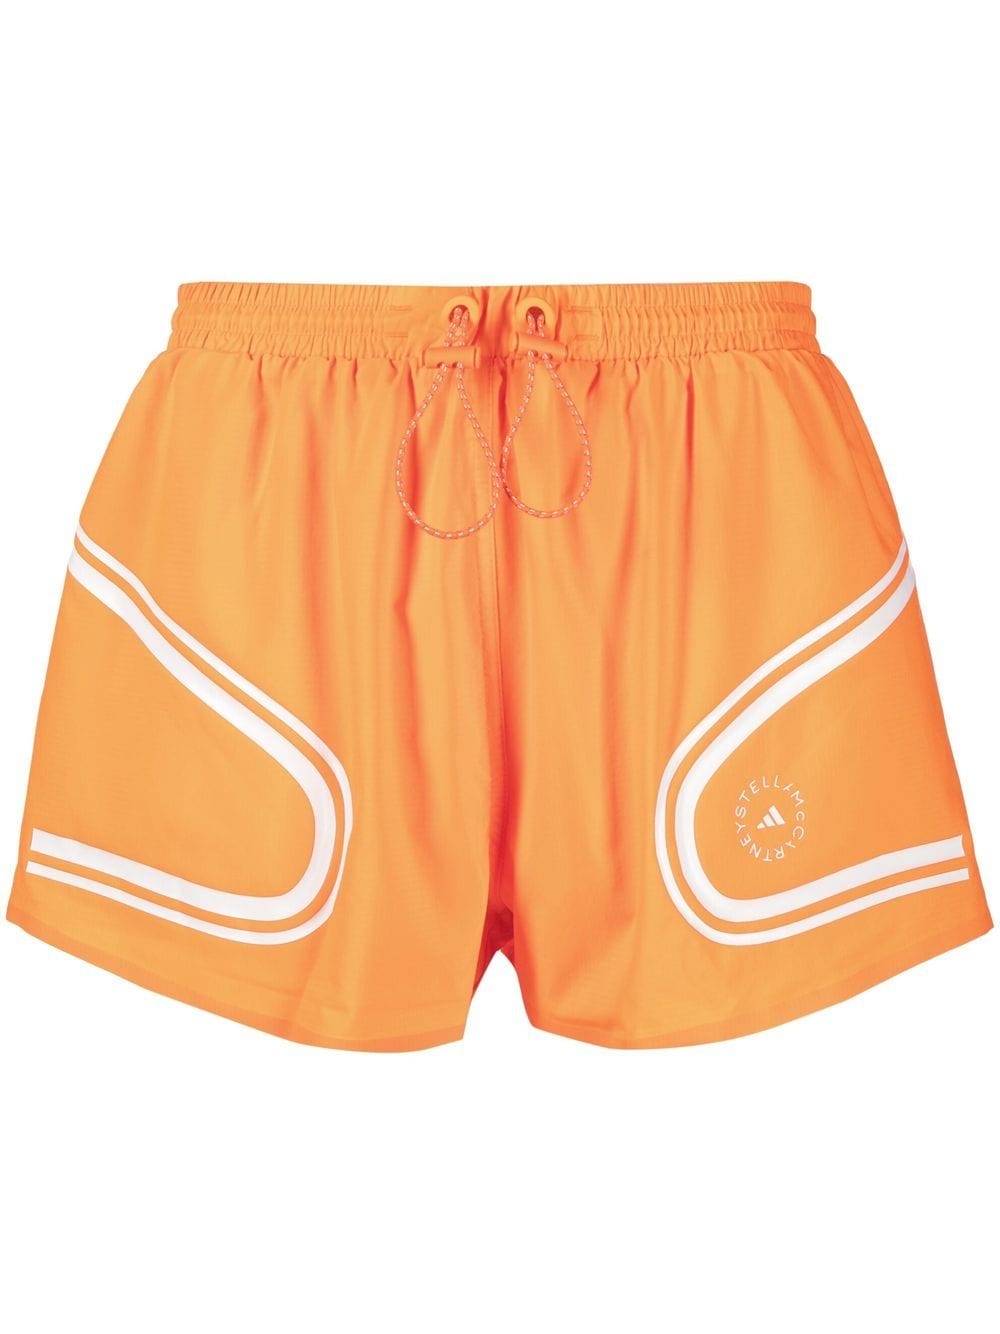 adidas by Stella McCartney Truepace running shorts - Orange